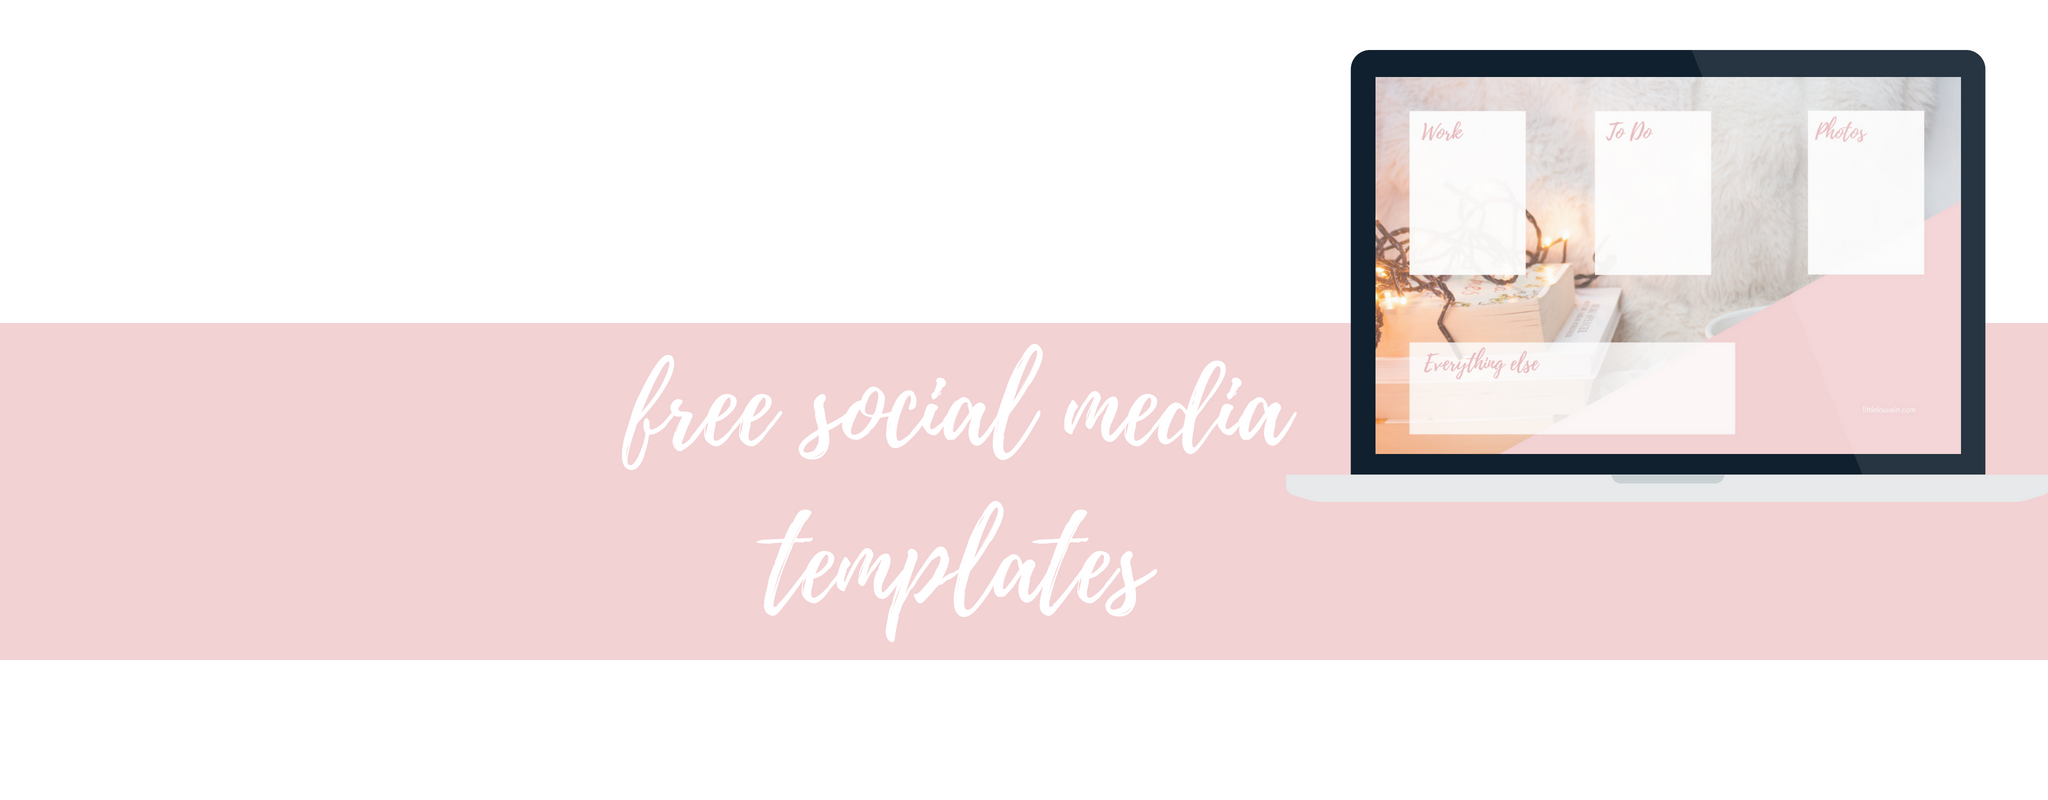 free social media templates